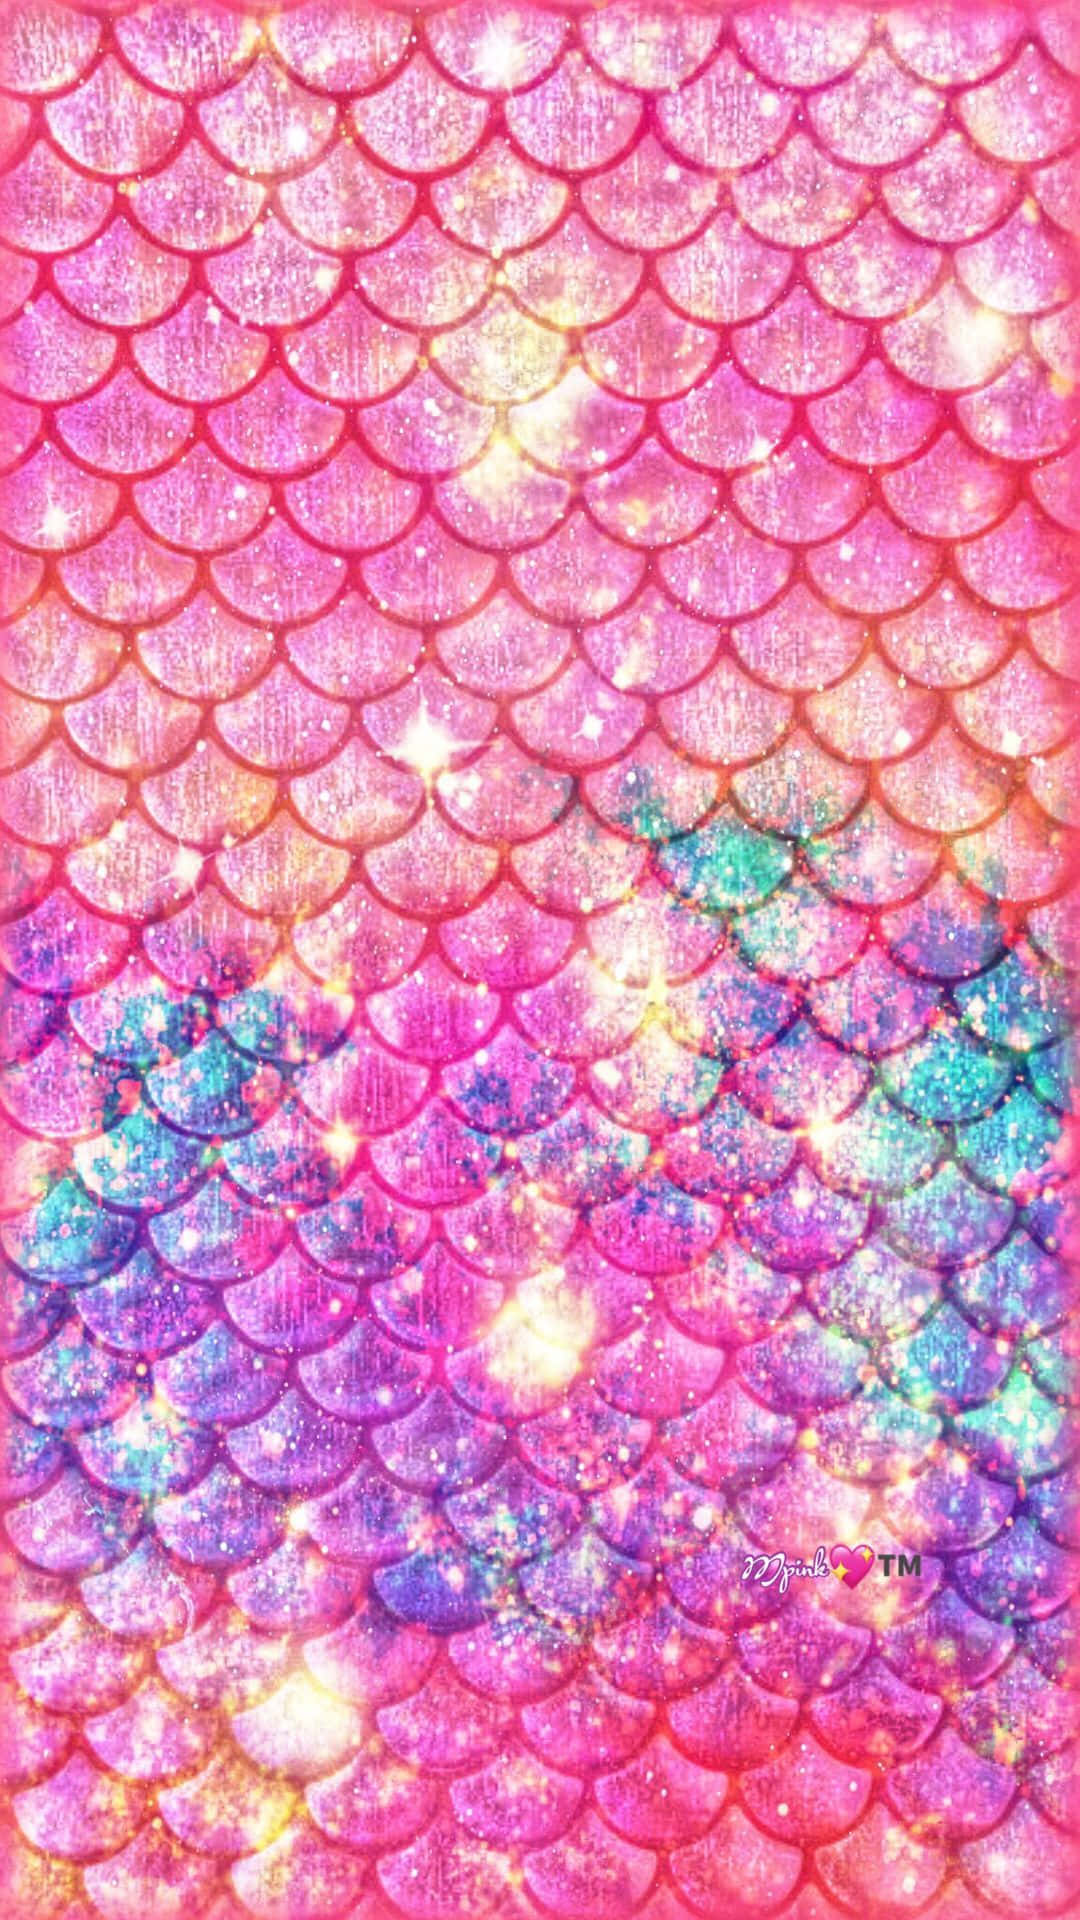 Havfrue Glitter 1080 X 1920 Wallpaper